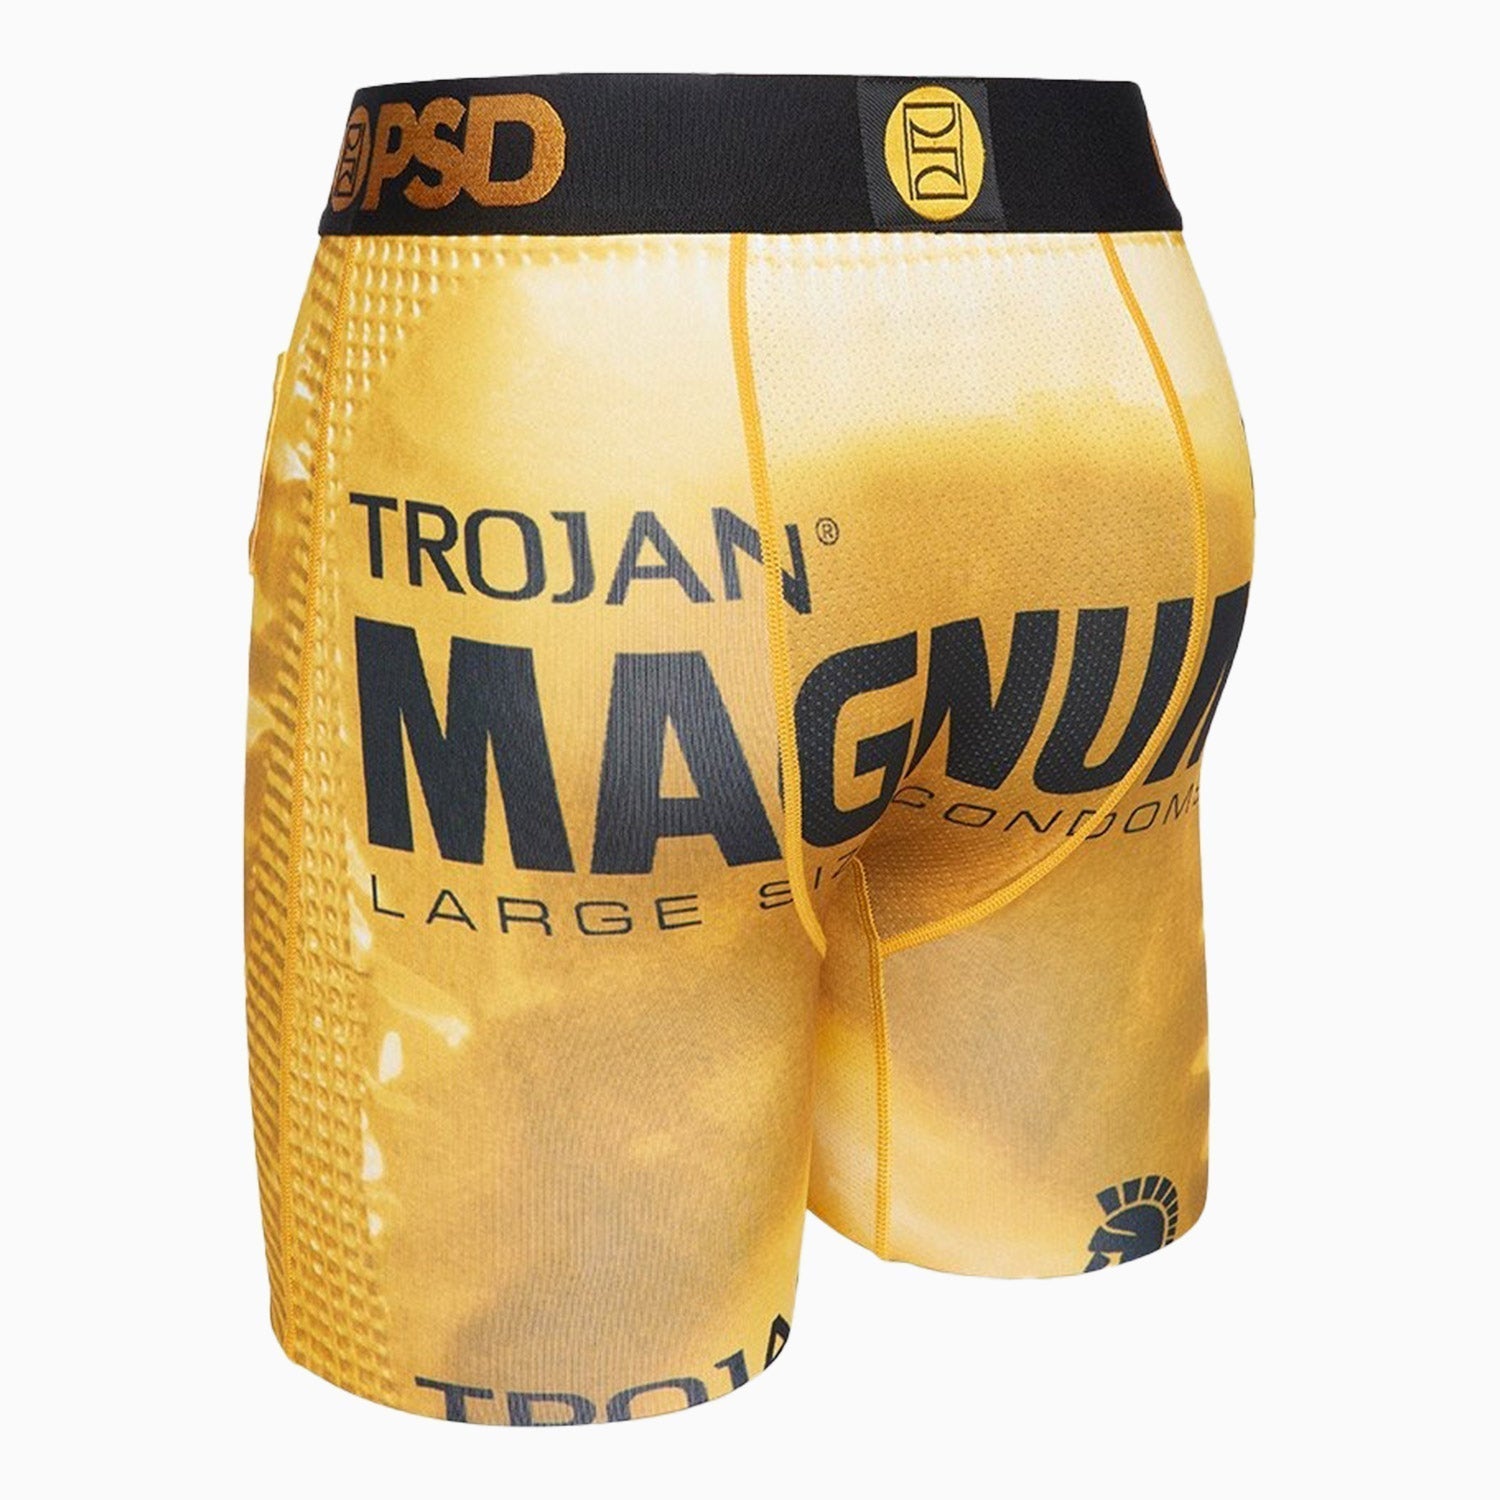 psd-underwear-mens-magnum-wrapper-boxers-421180021